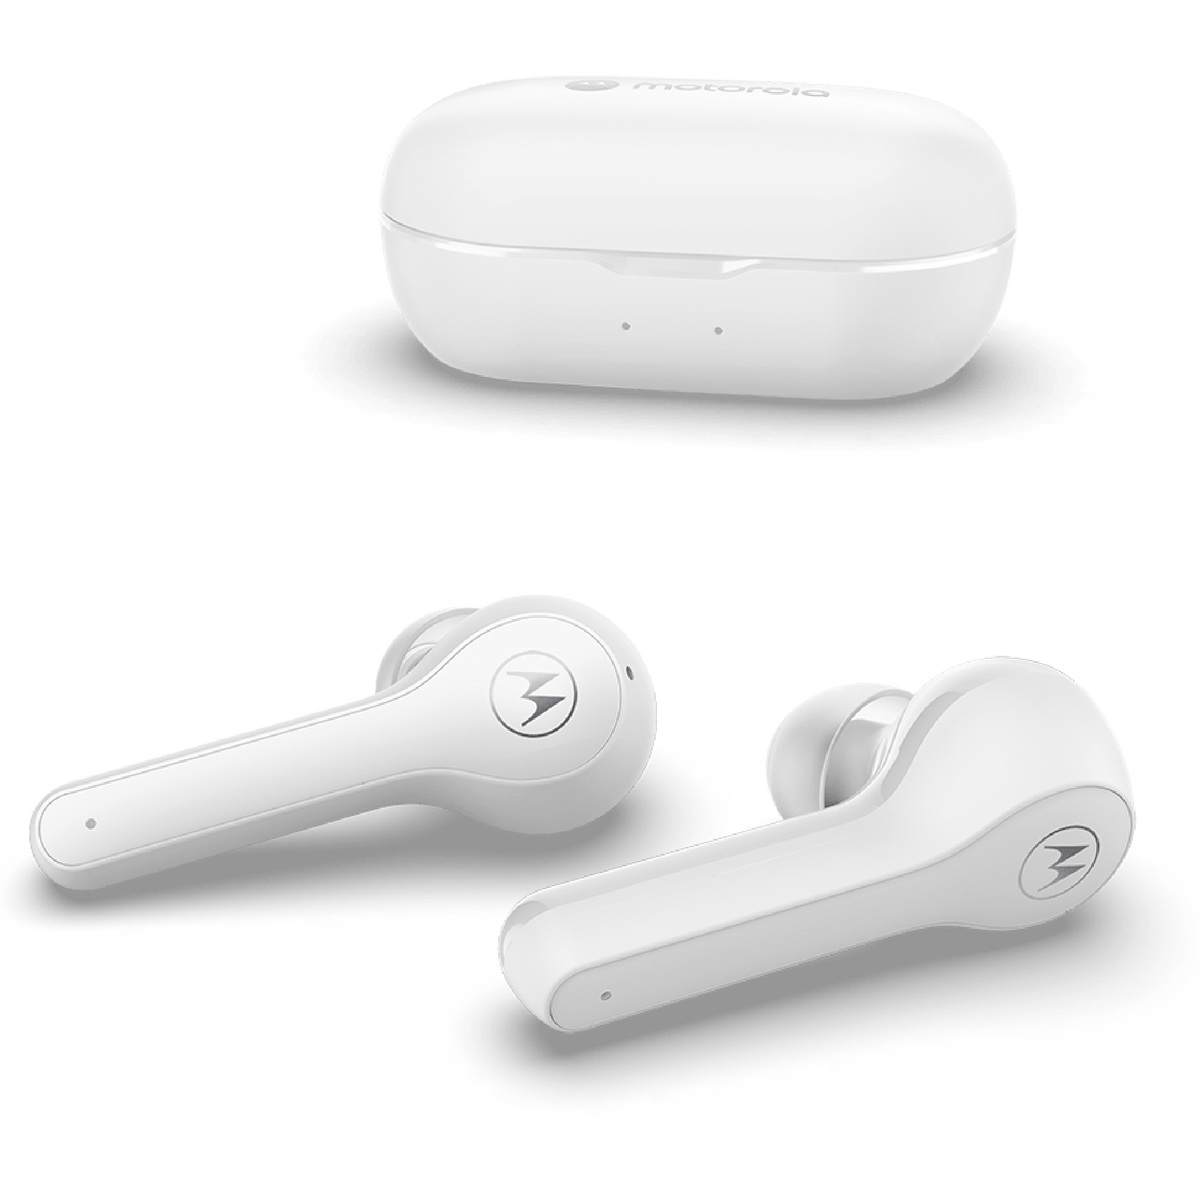 MOTO Buds 085 - True wireless earbuds from motorola sound,White